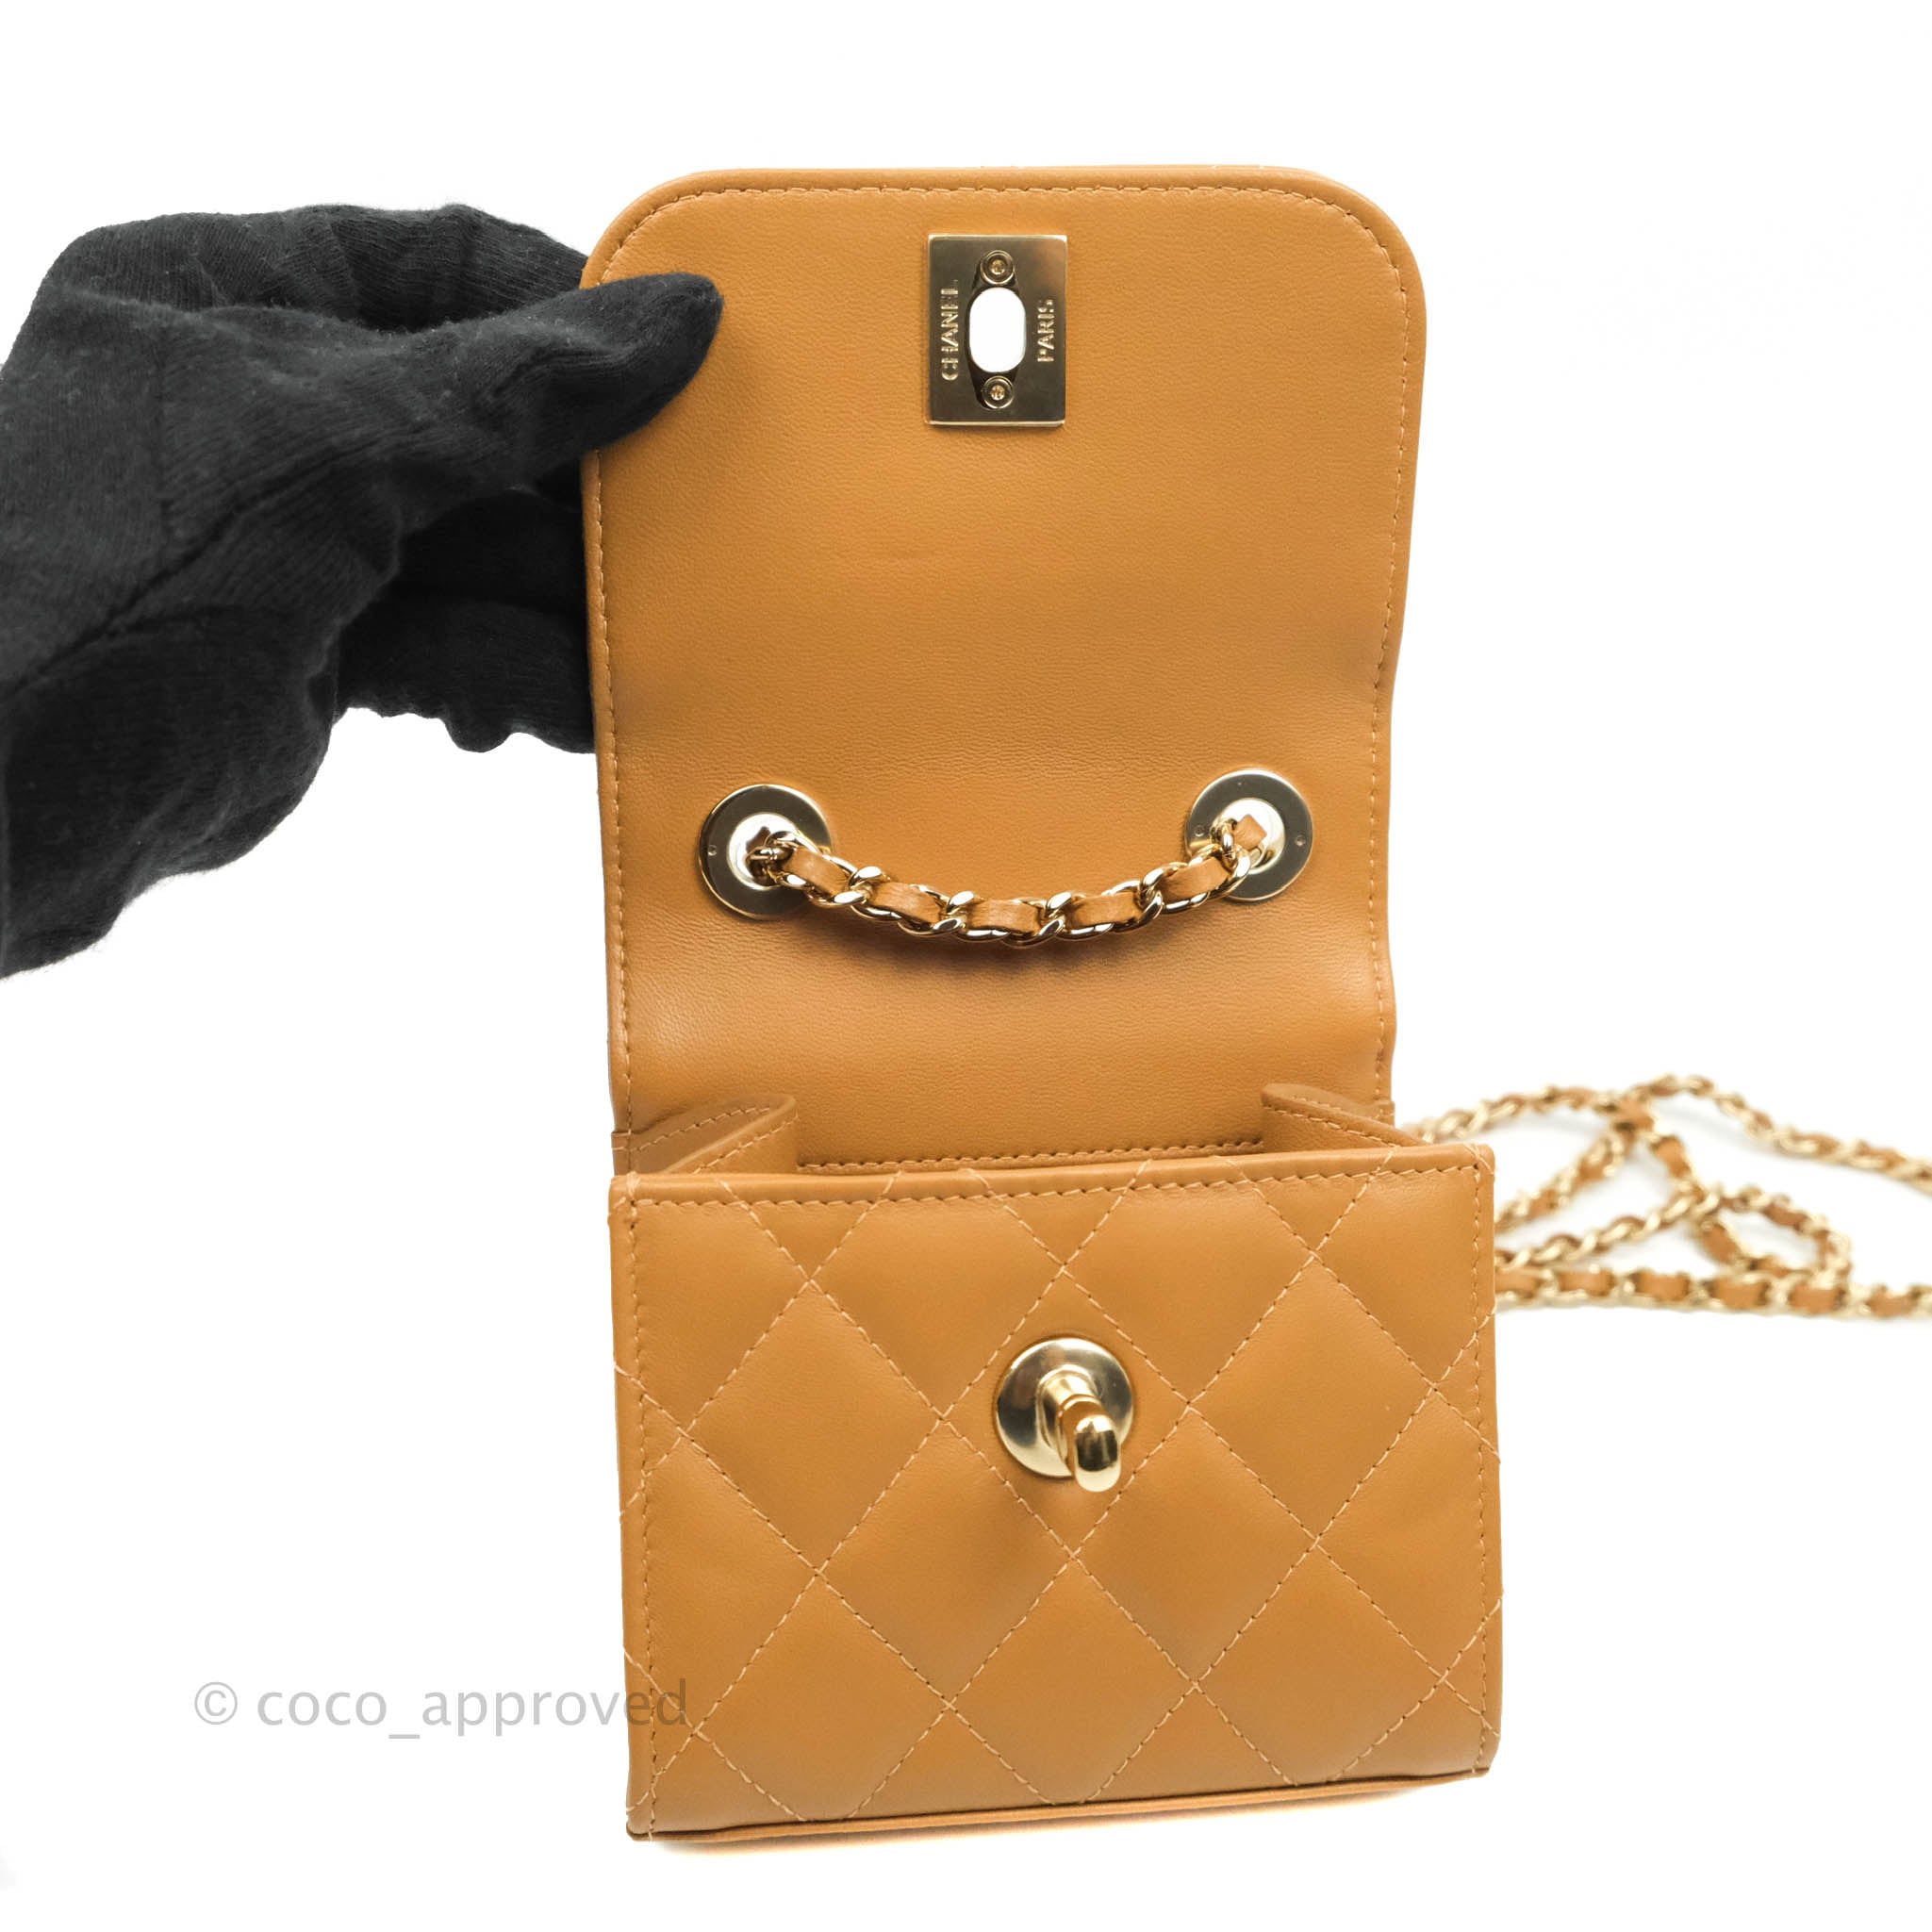 Chanel Orange Quilted Velvet CC Mini Phone Holder Clutch Chanel